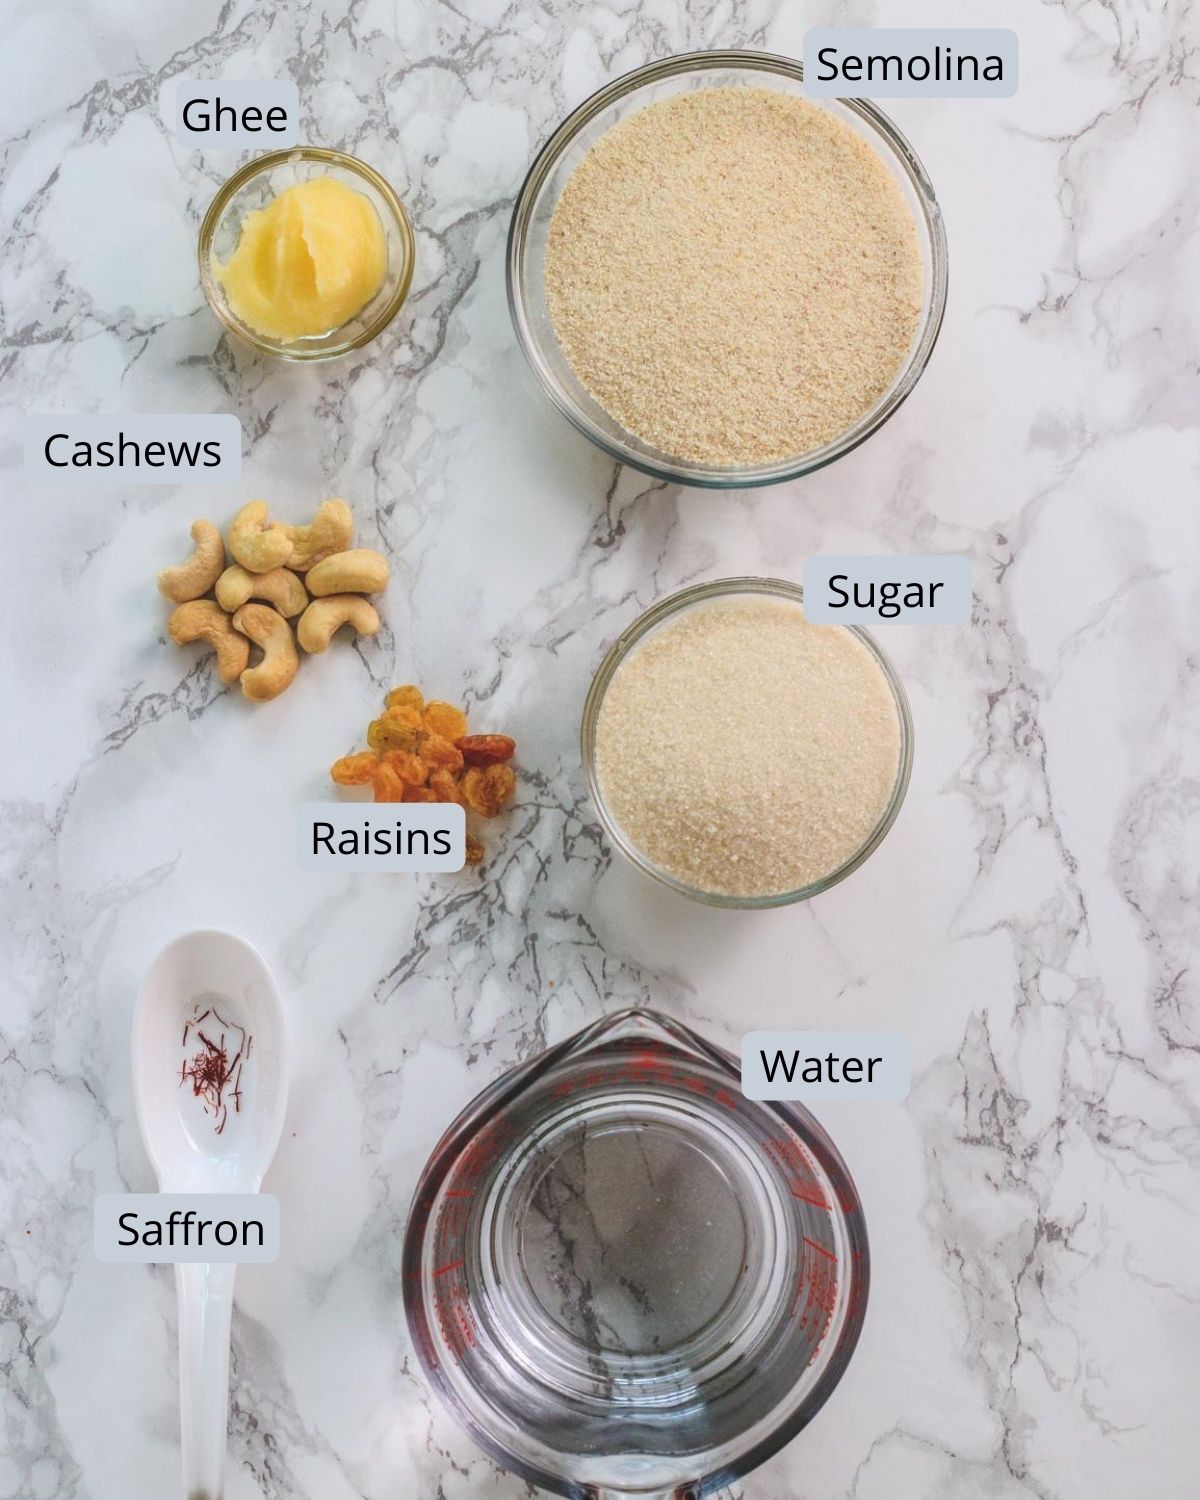 Image of ingredients used in rava kesari includes semolima, ghee, sugar, saffron, water, cashews, raisins